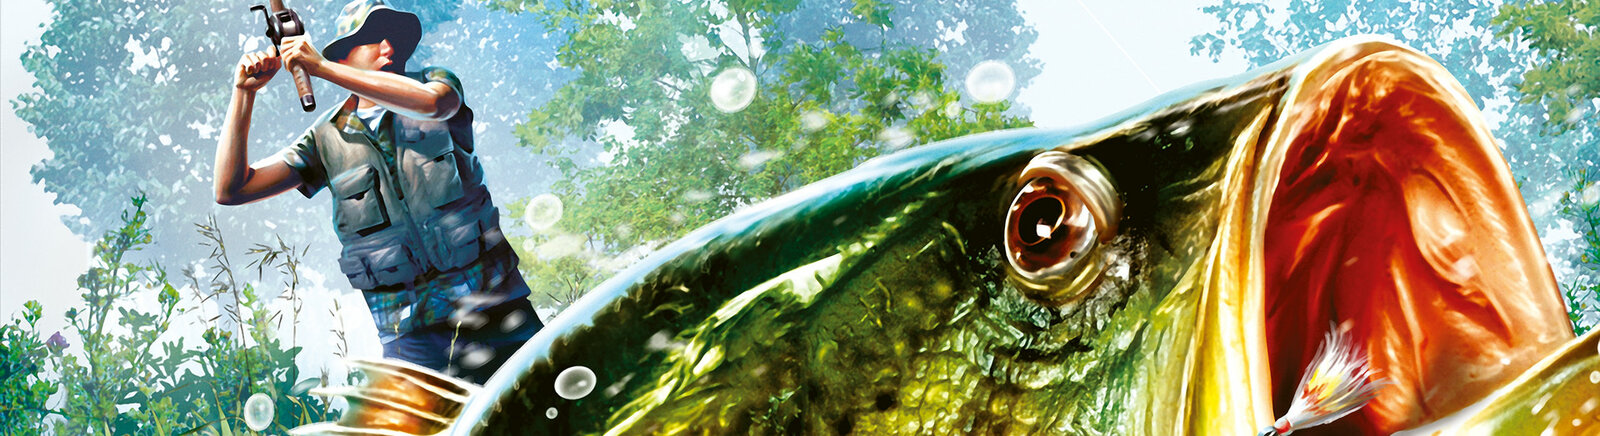 Дата выхода SEGA Bass Fishing  на PC, PS3 и Xbox 360 в России и во всем мире